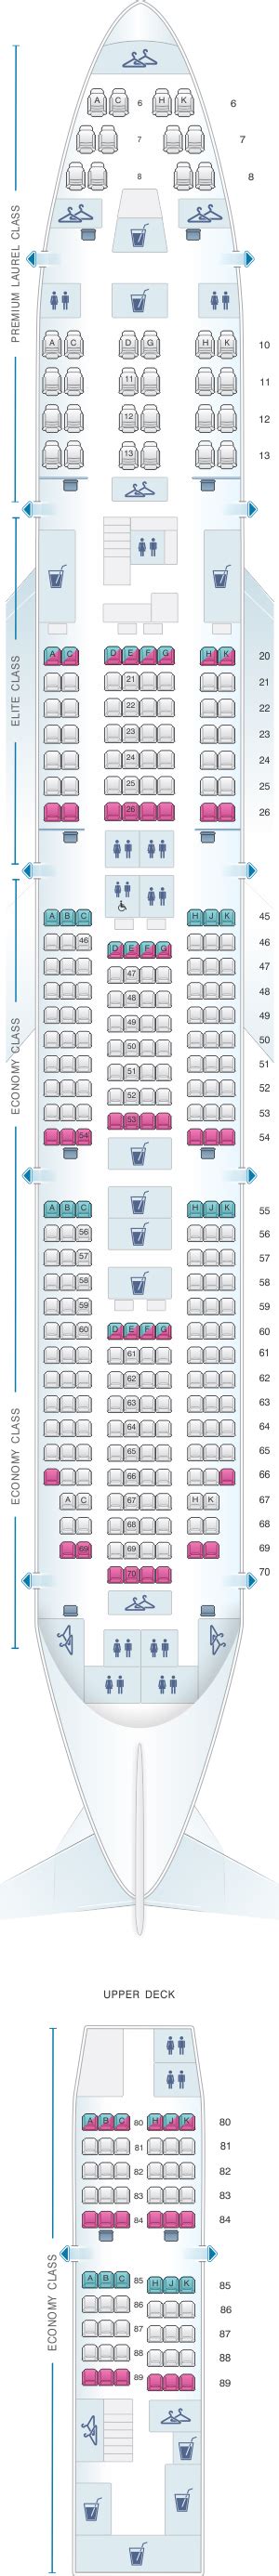 Eva Air 777 300er Seat Map